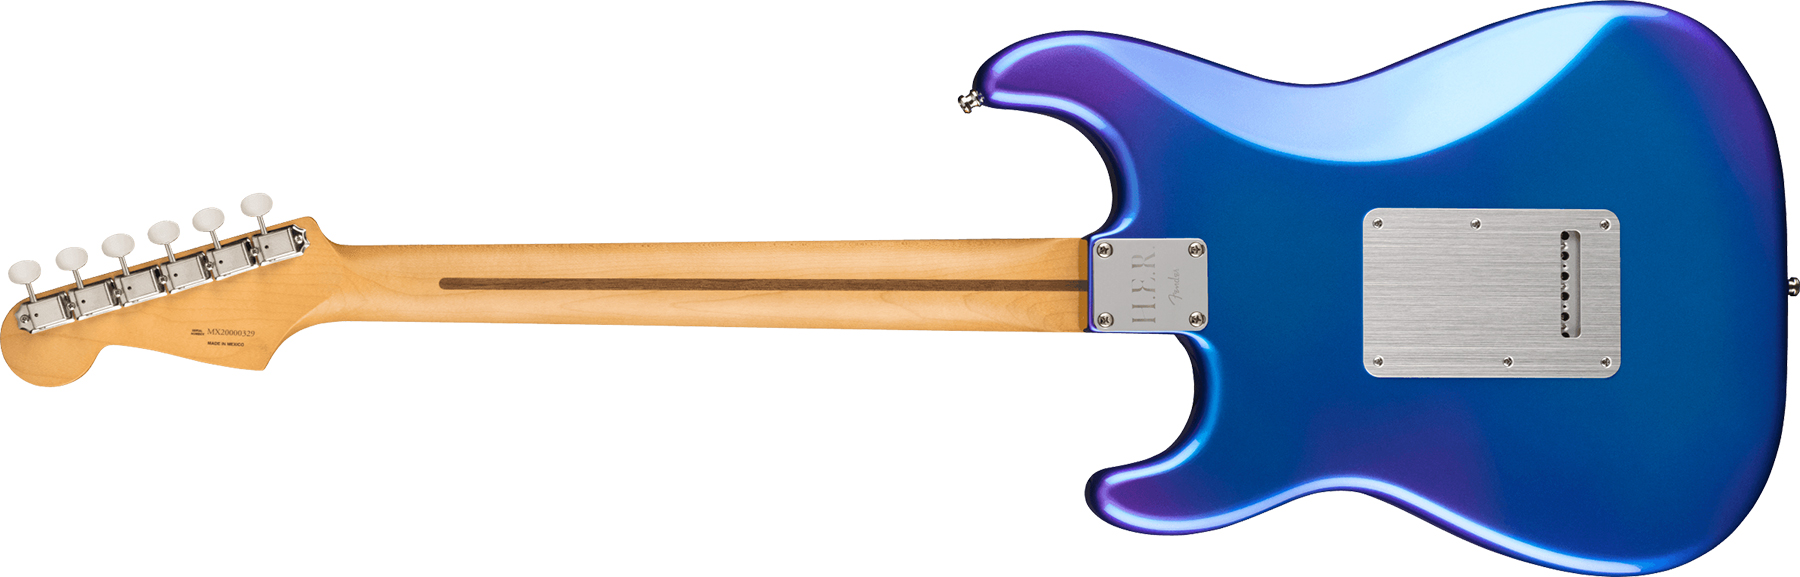 Fender H.e.r. Strat Ltd Signature Mex 3s Trem Mn - Blue Marlin - Elektrische gitaar in Str-vorm - Variation 1